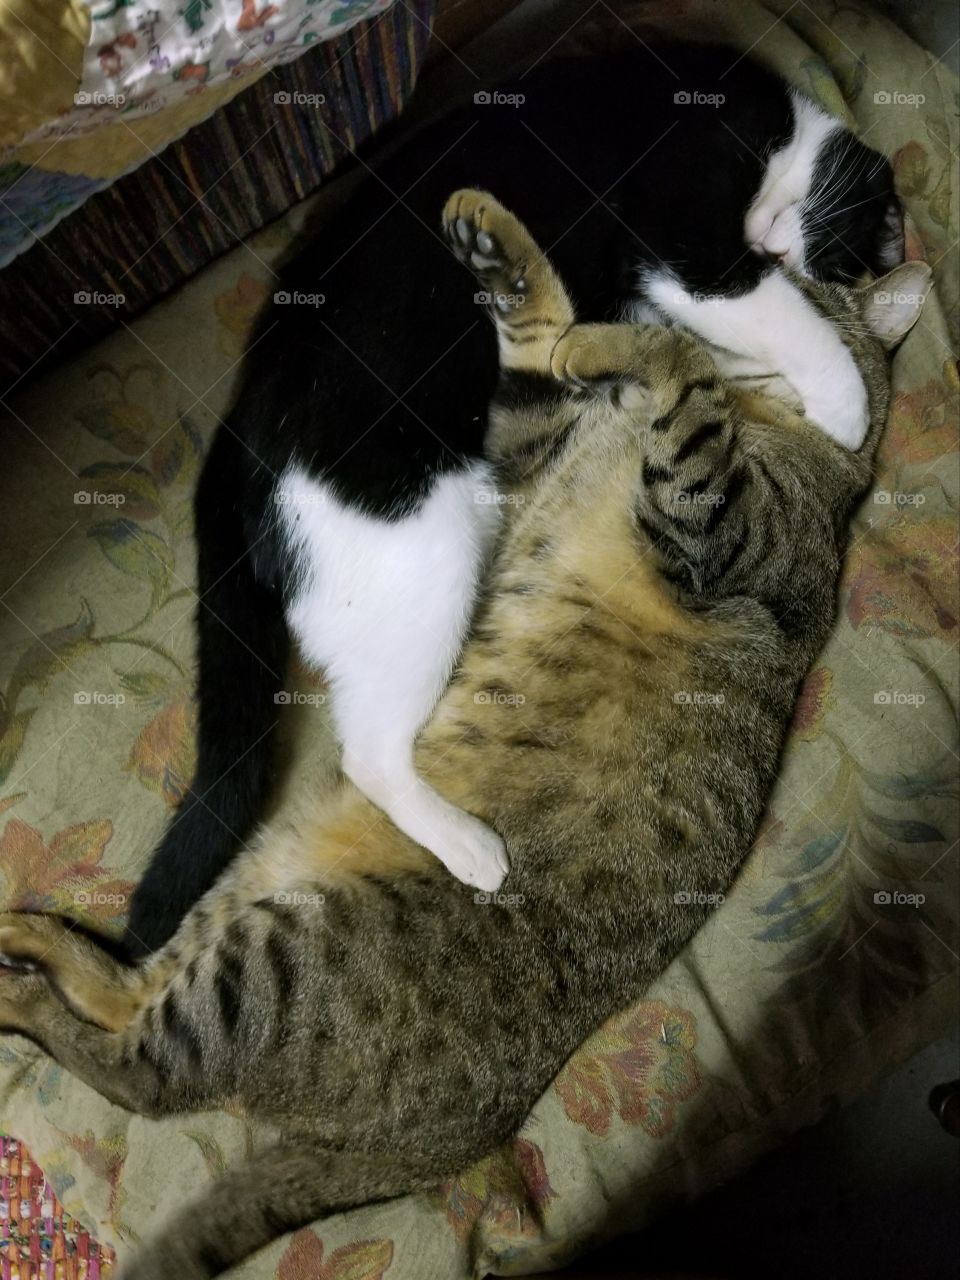 Snuggling Sleeping Kitties From Above